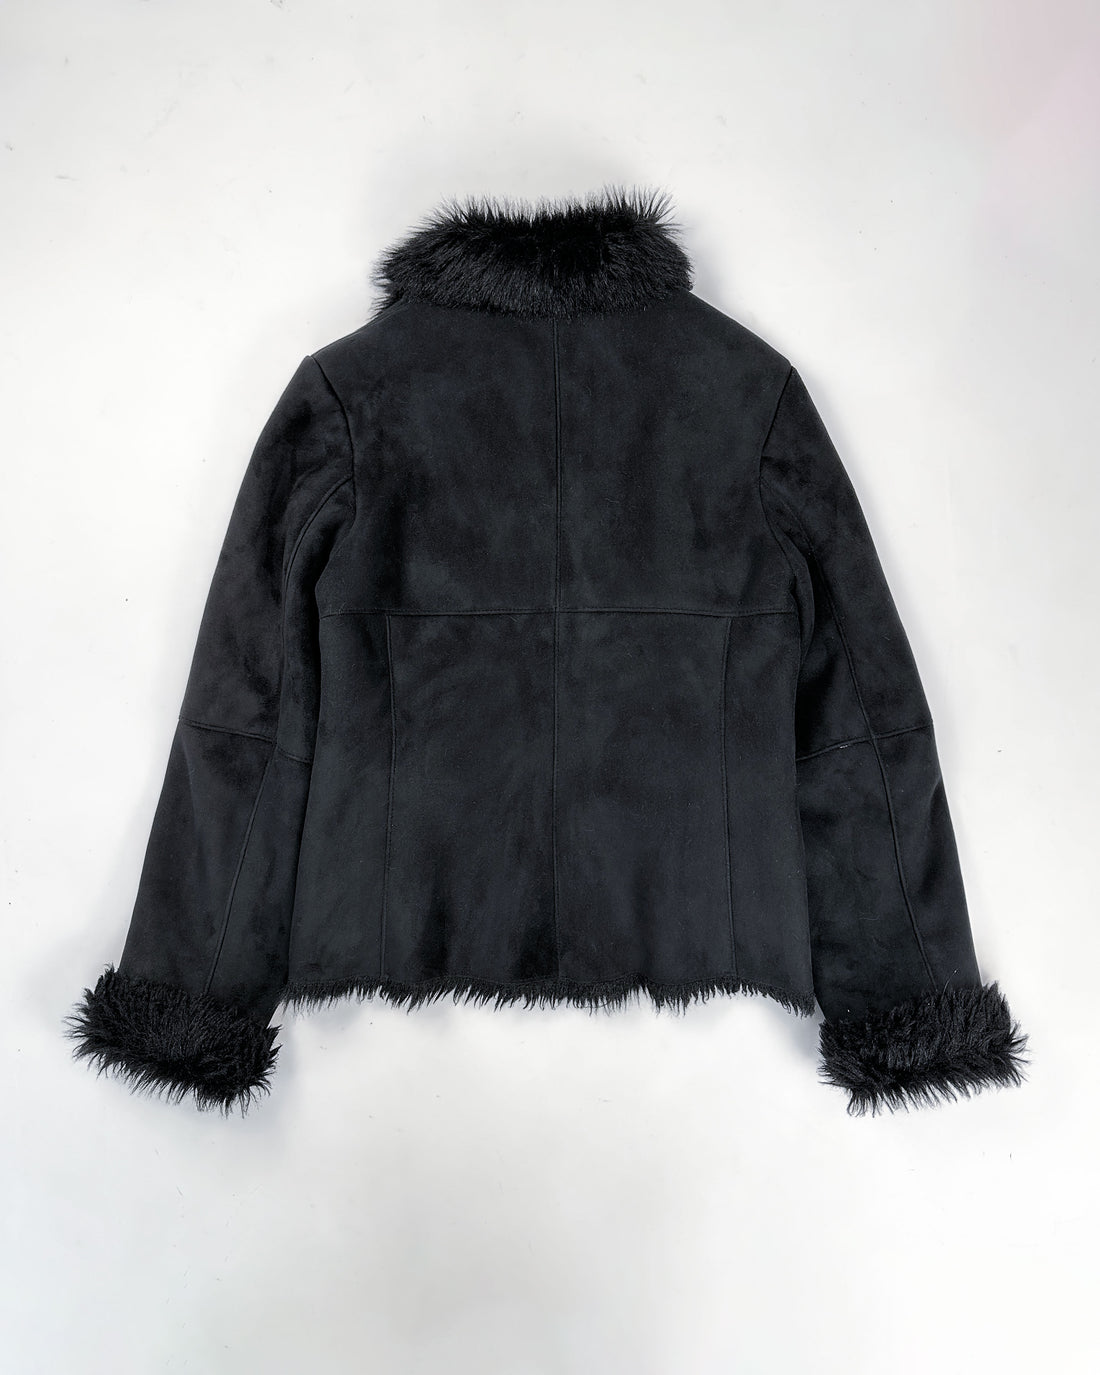 Balmain Black Fur Stuffed Jacket 1900's